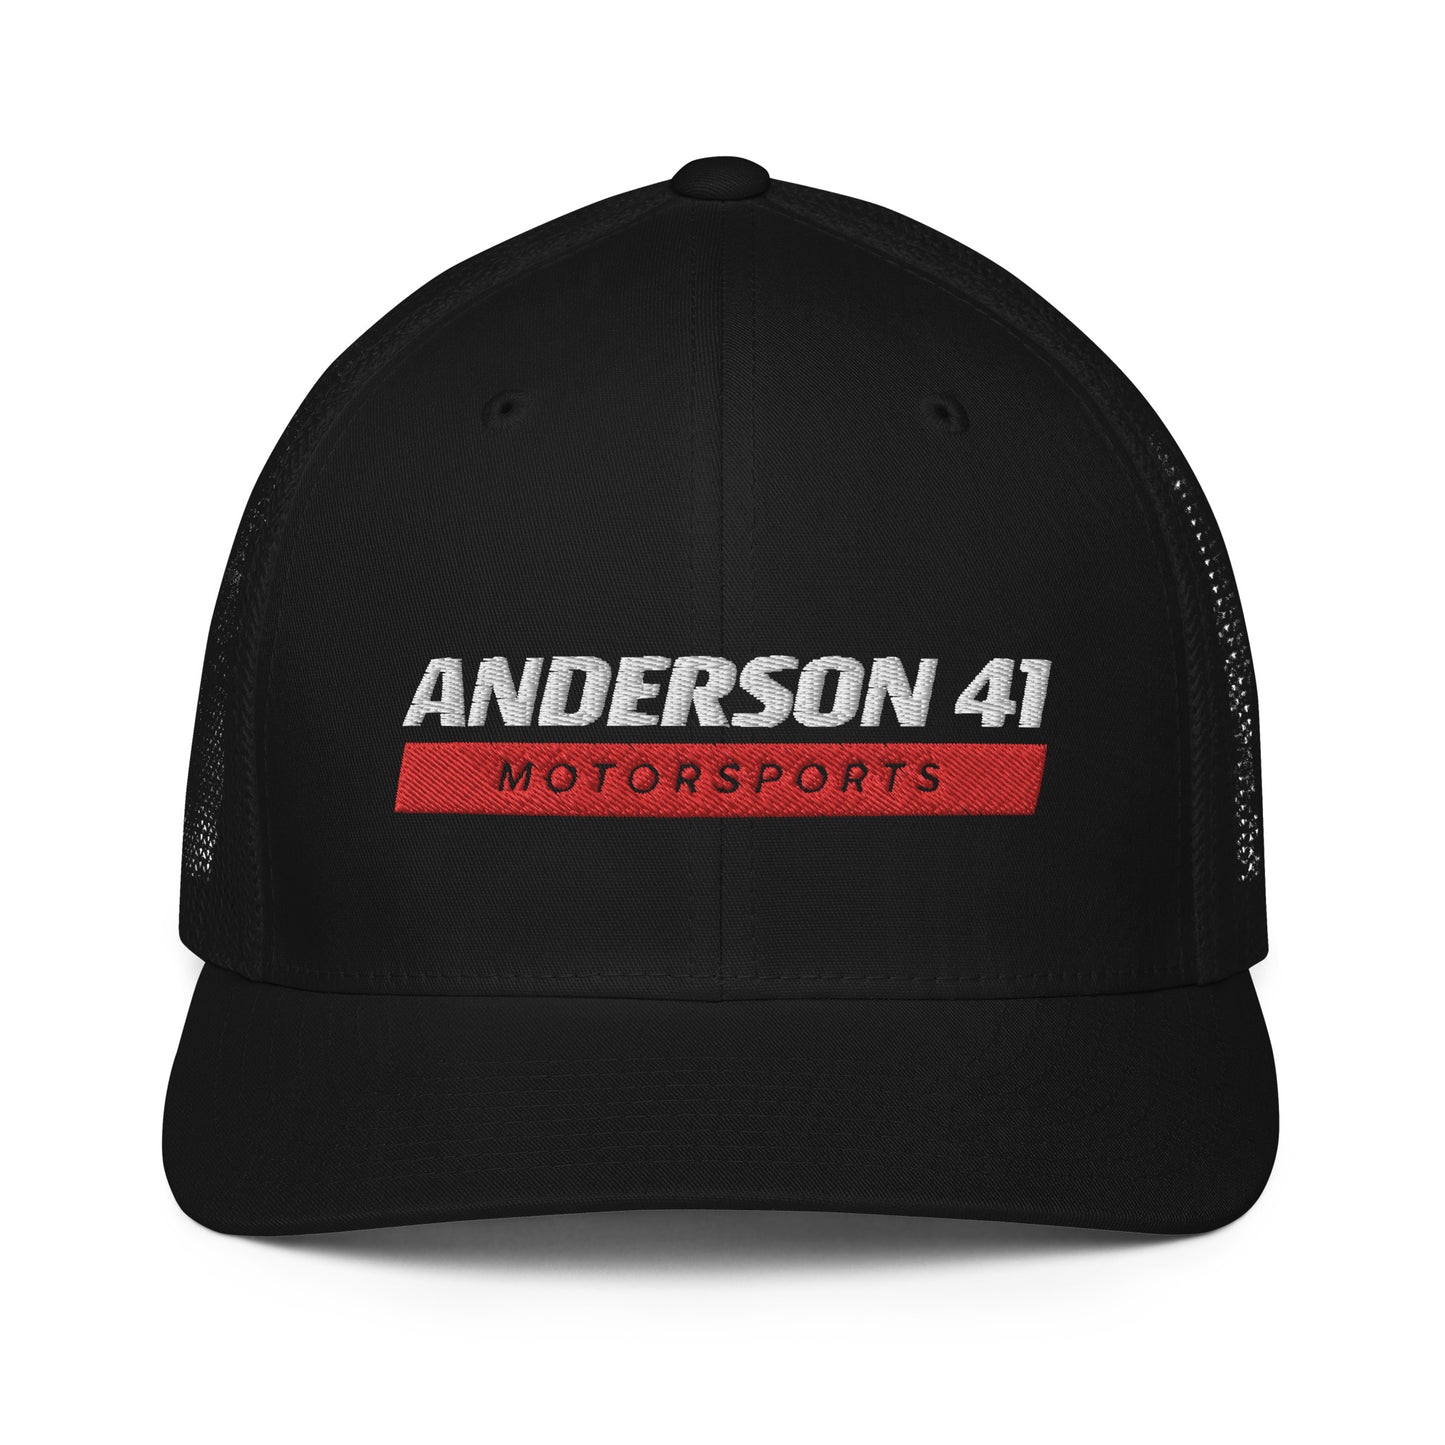 Anderson41 Motorsports | Mesh Back Trucker Cap